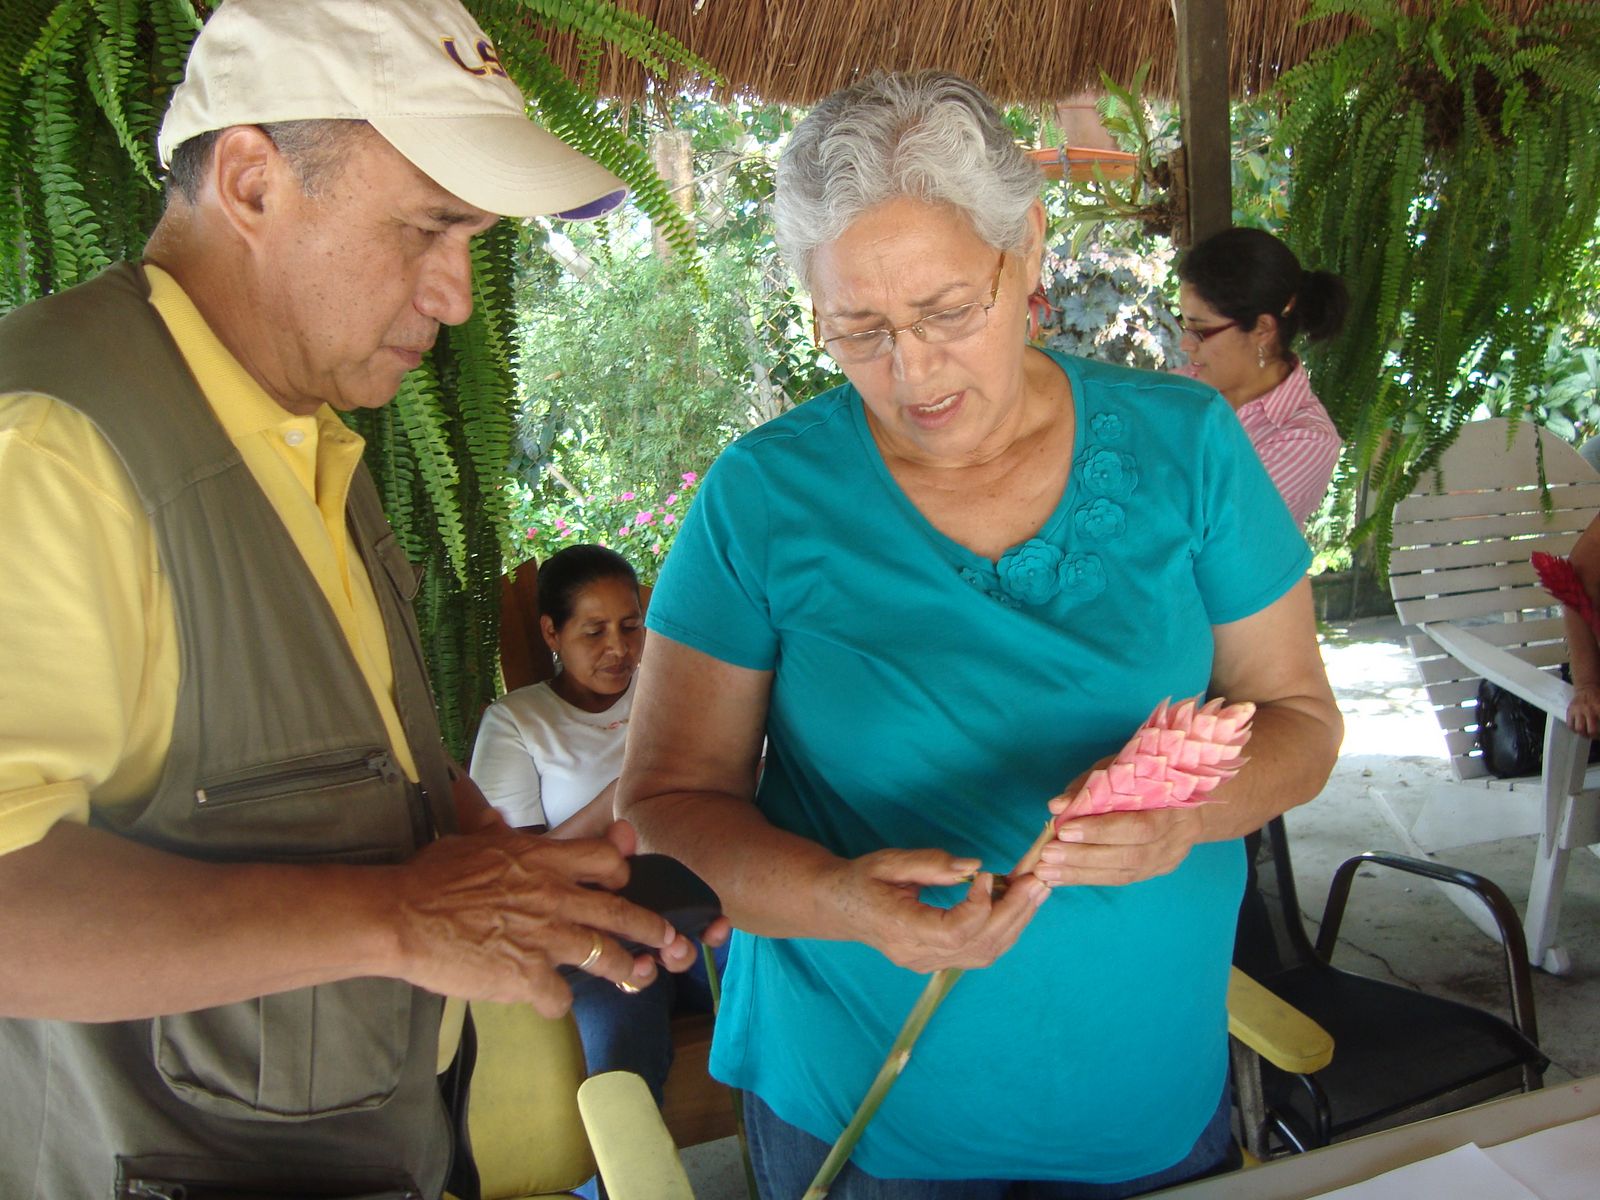 Farmer and government representative examine a large flower stem.